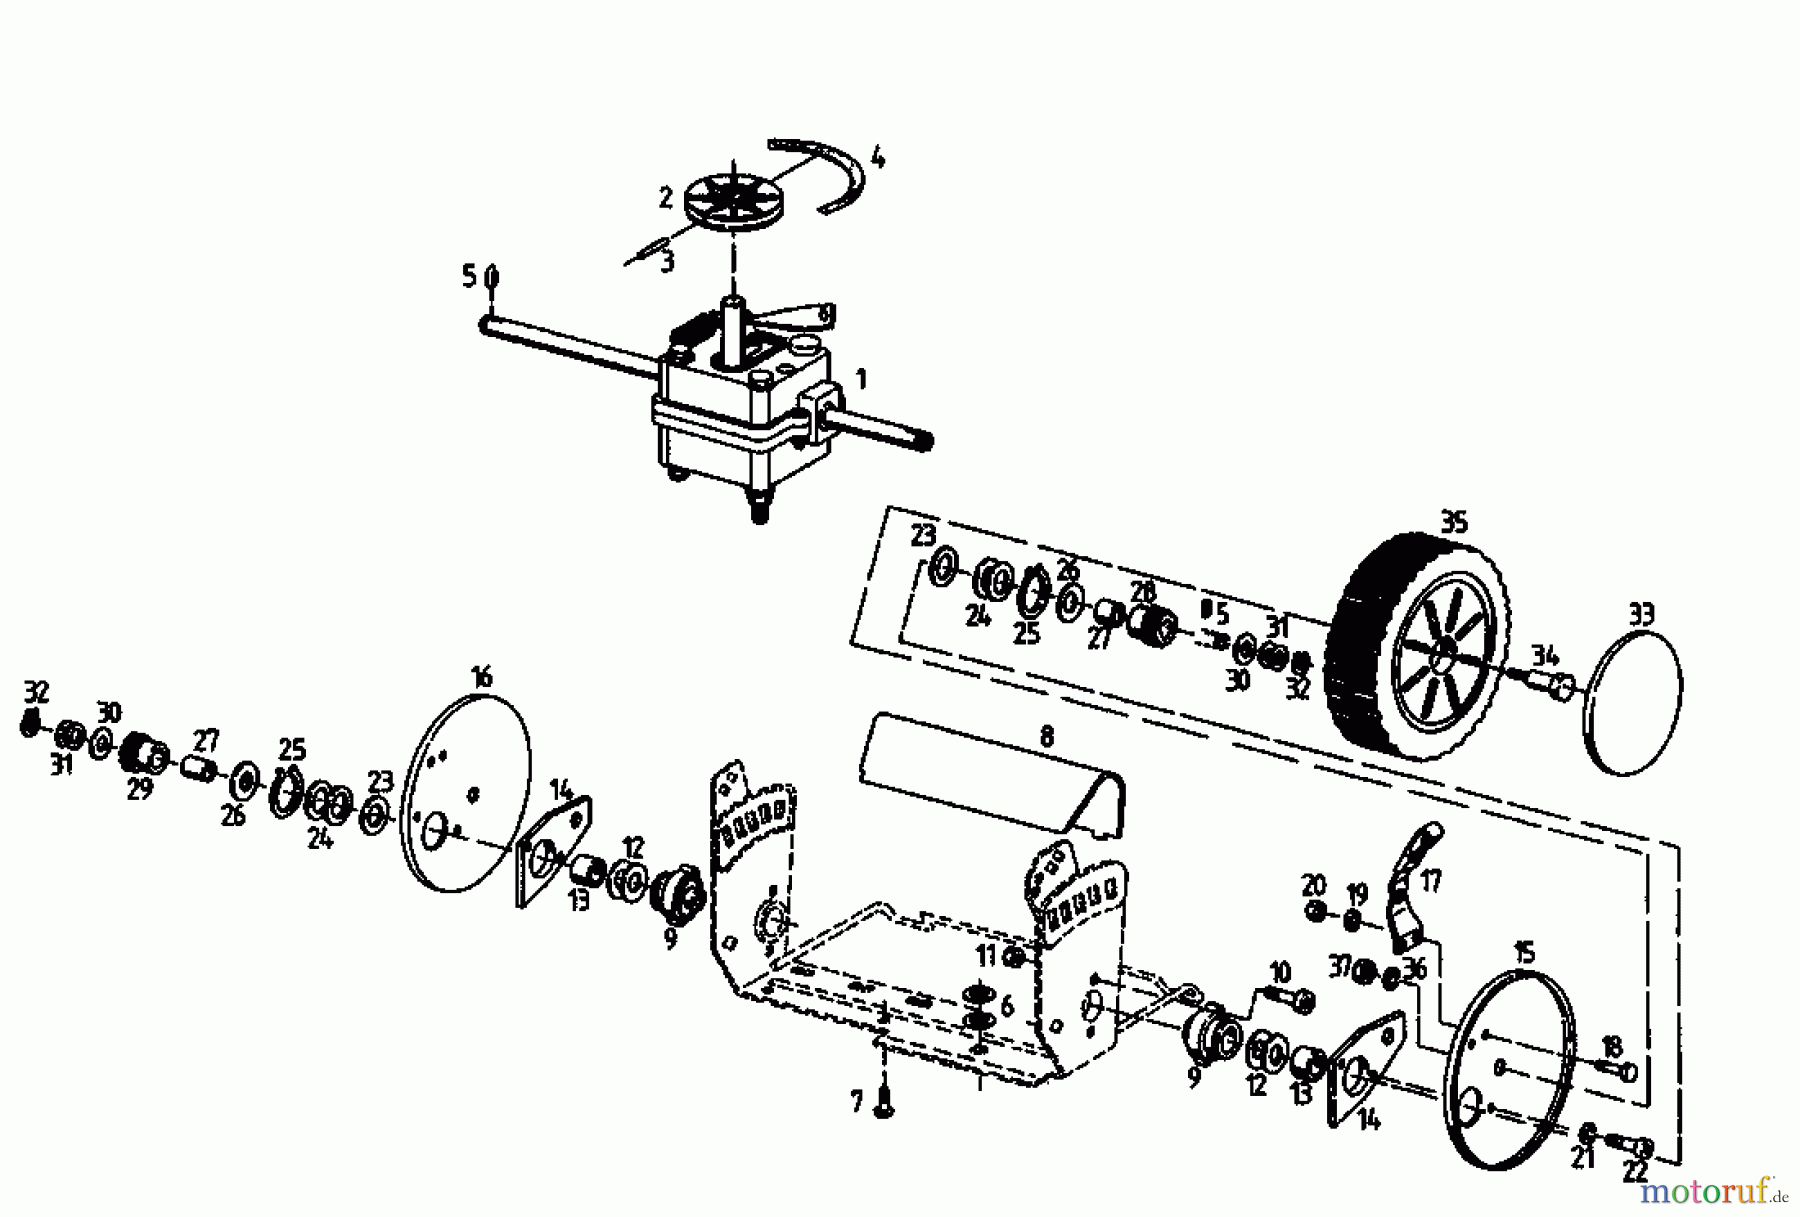  Fair Line Petrol mower self propelled BA 450 04025.03  (1994) Gearbox, Wheels, Cutting hight adjustment